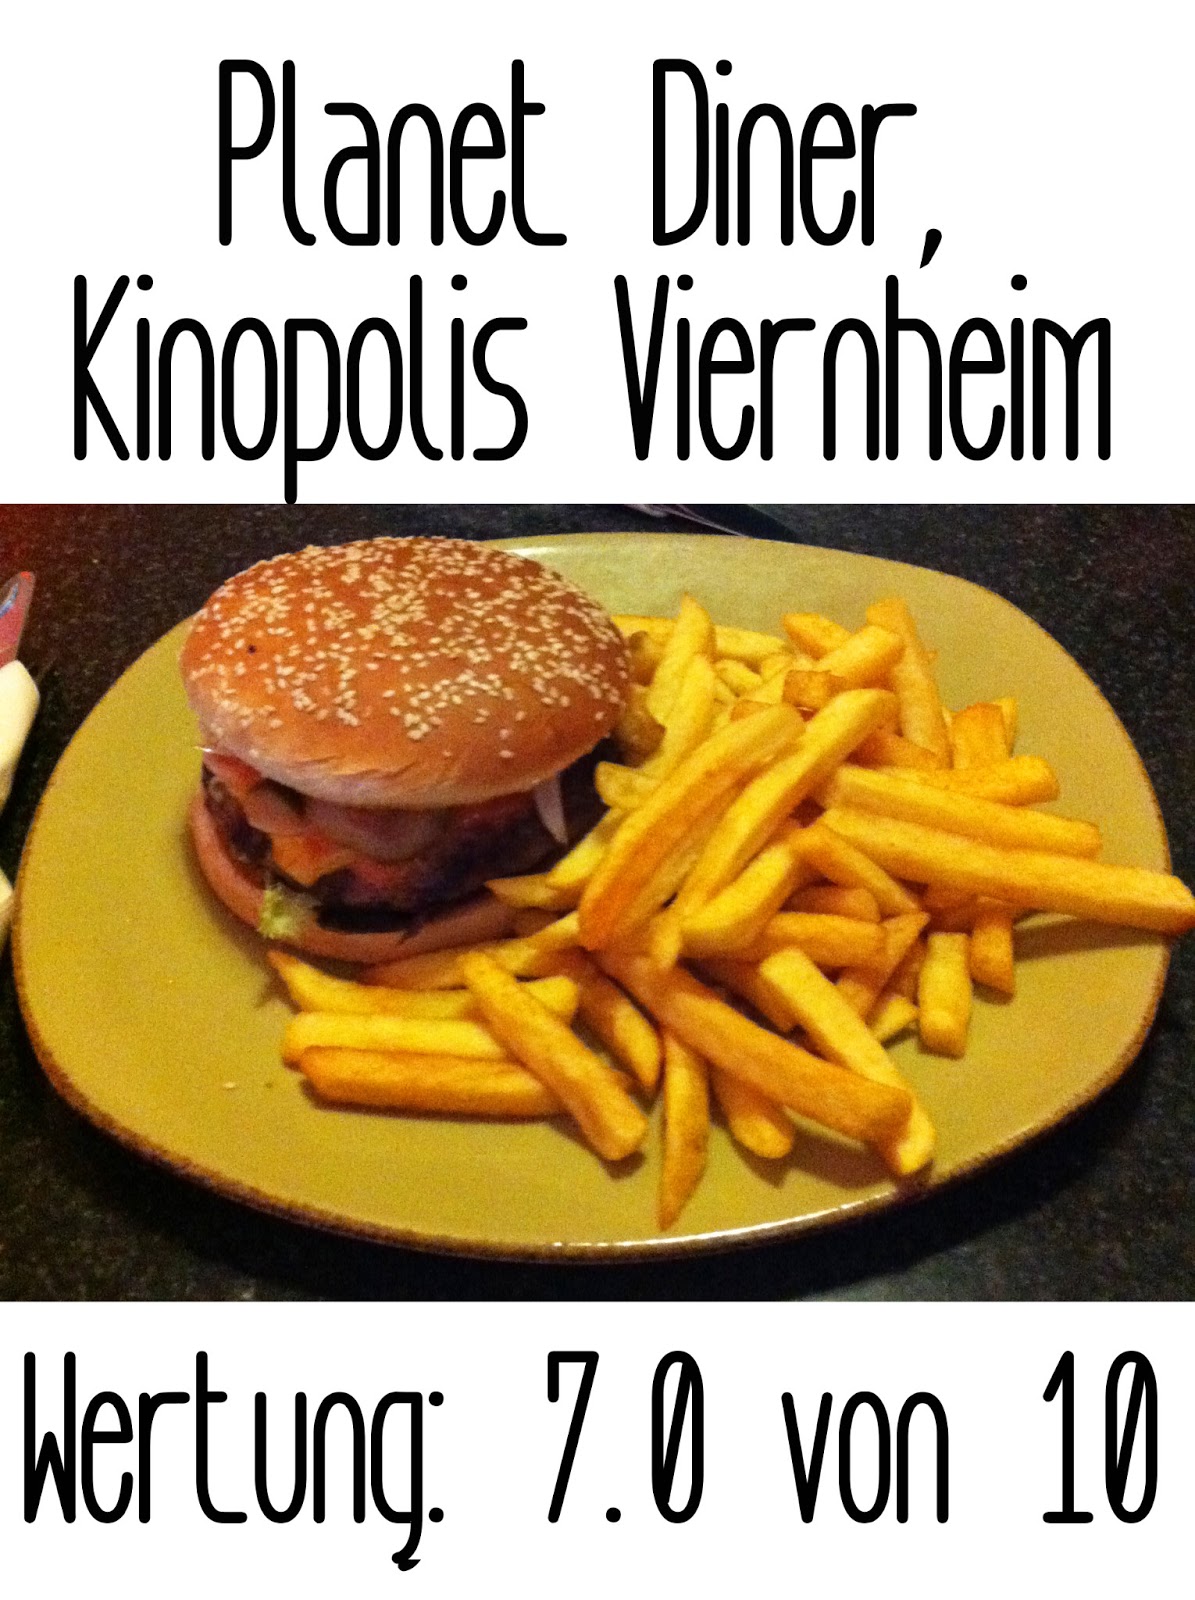 http://germanysbestburger.blogspot.de/2013/04/planet-diner-kinopolis-viernheim.html